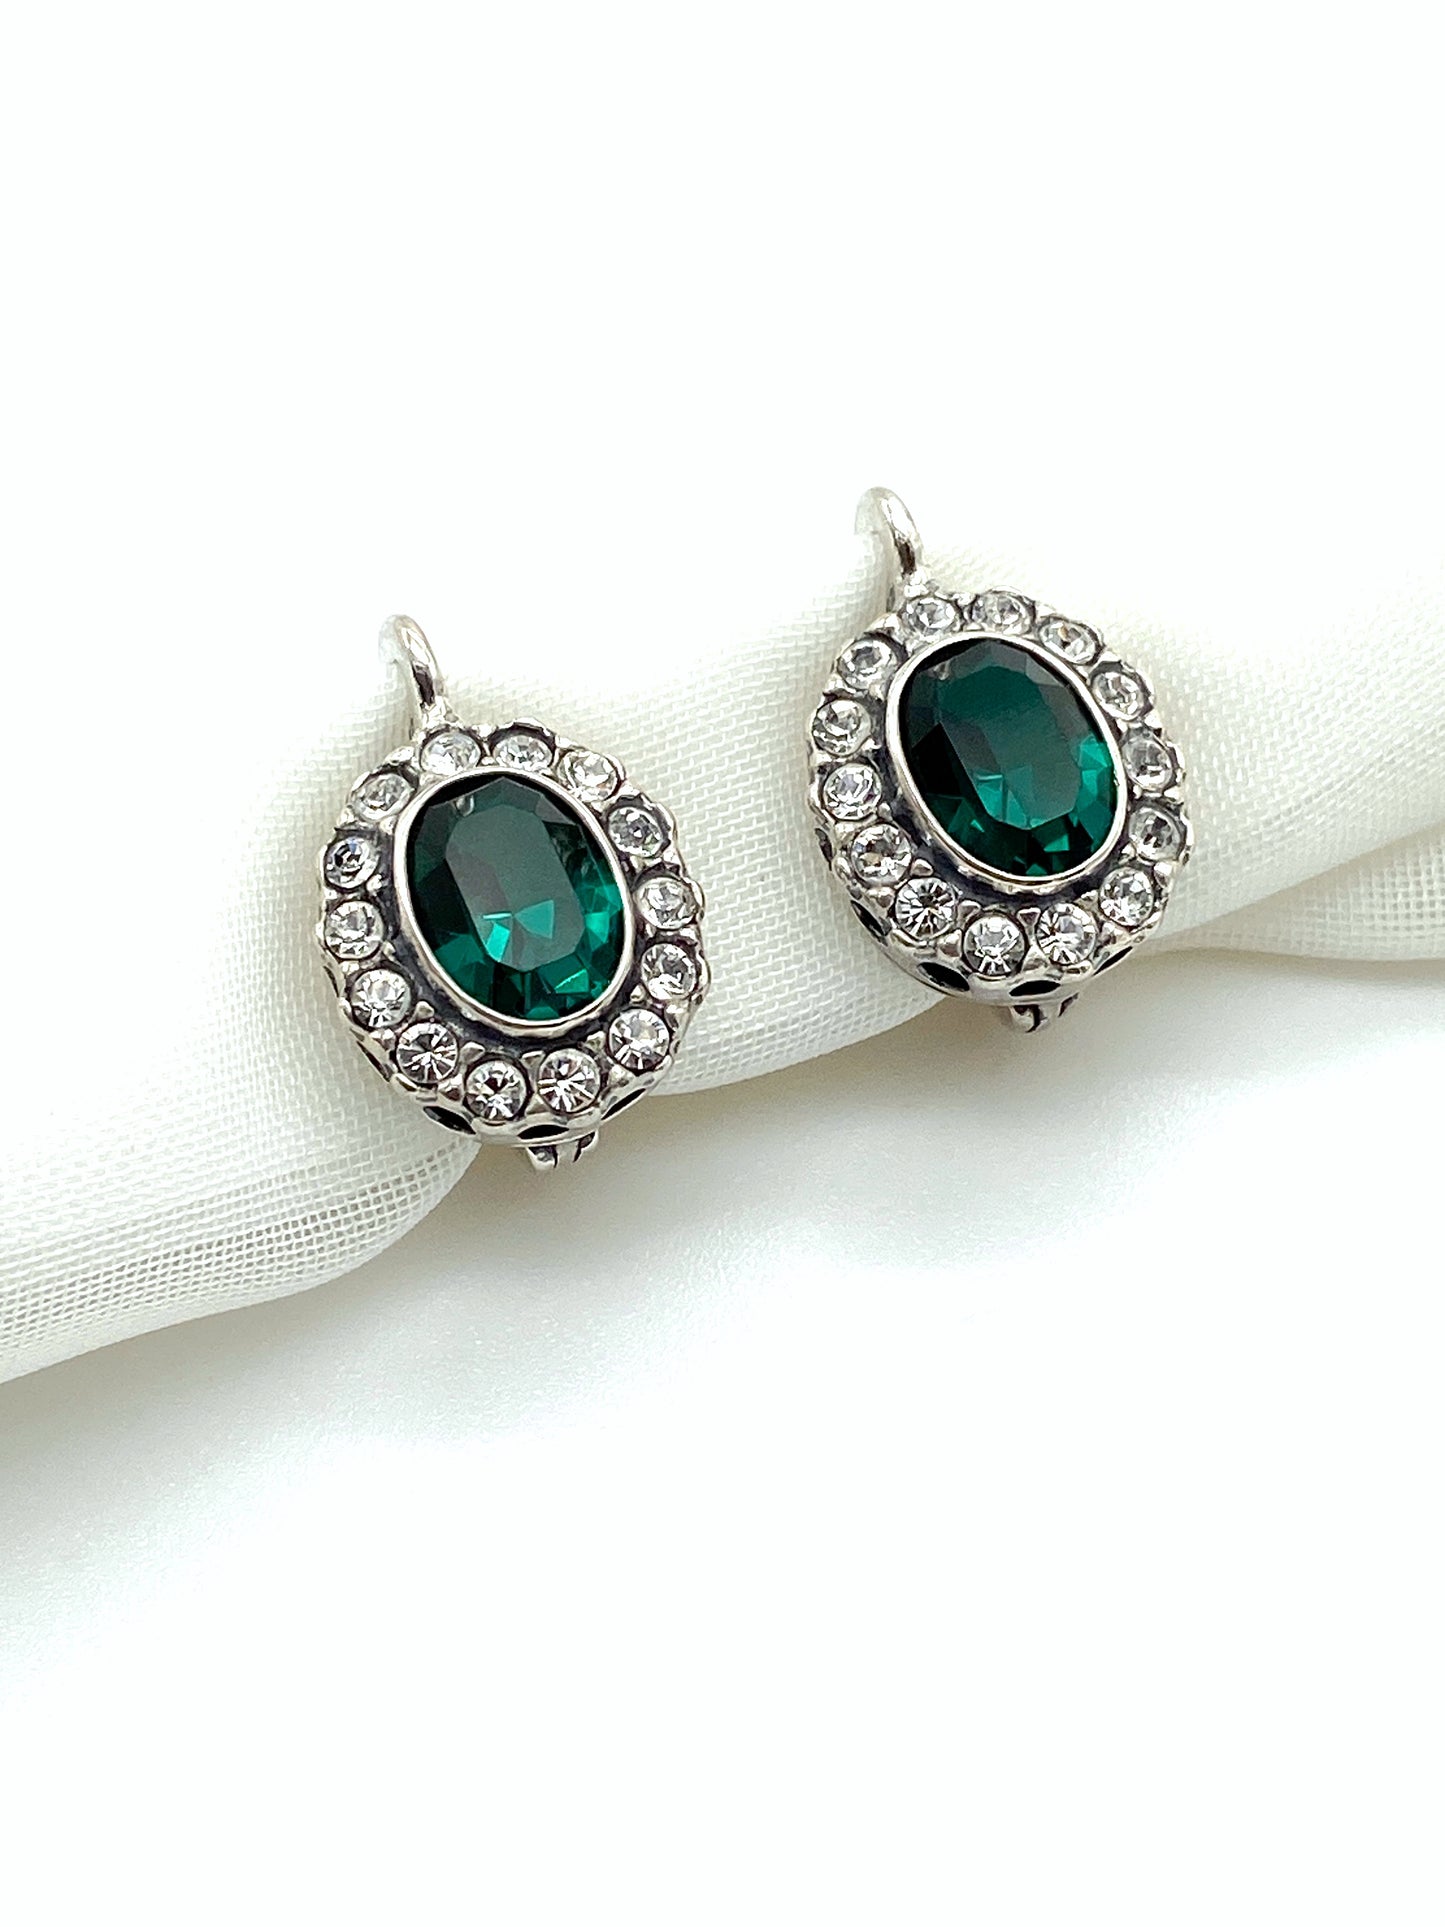 Classic - Emerald earrings